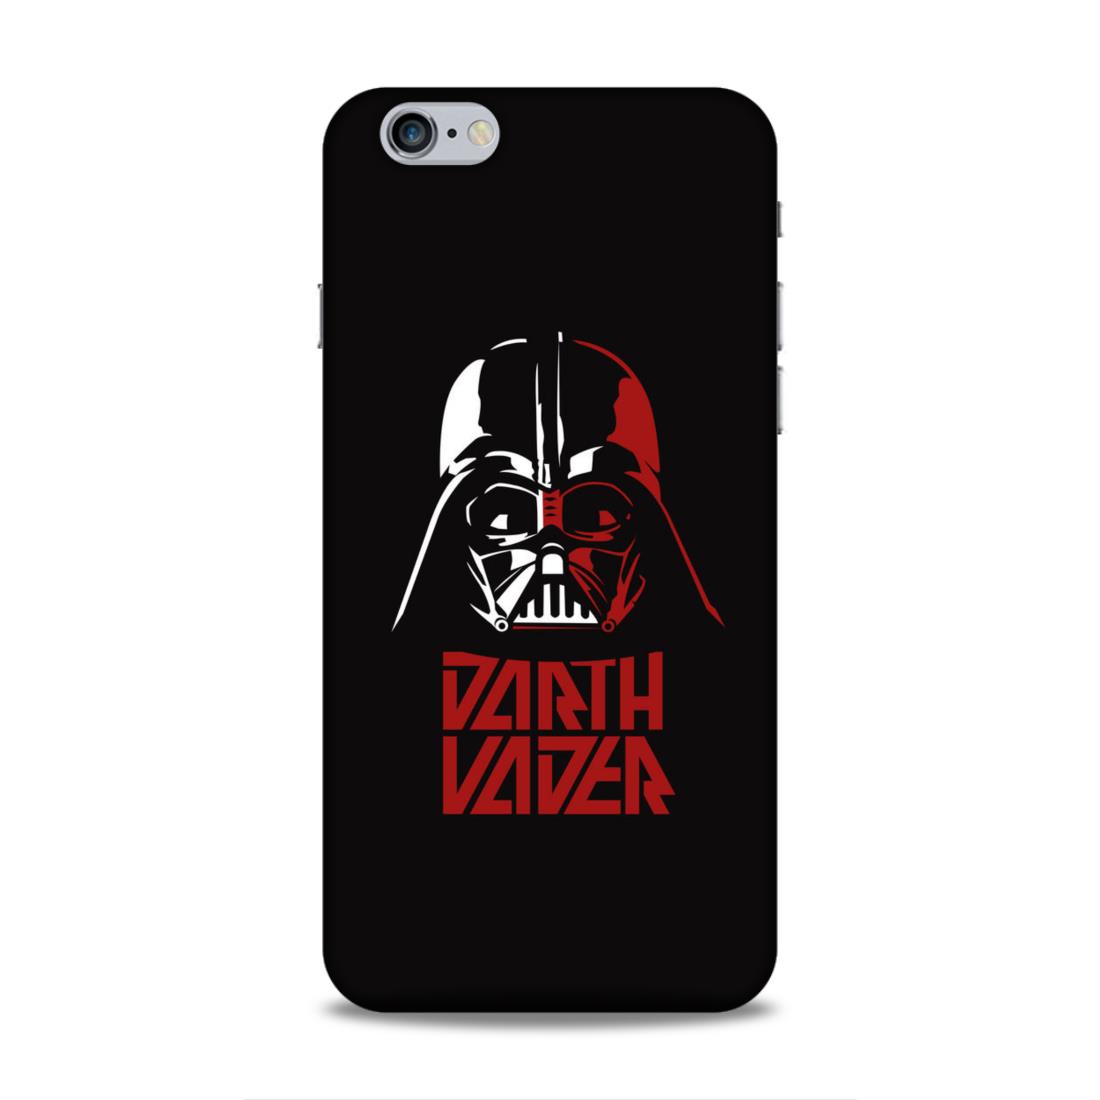 Darth Vader Hard Back Case For Apple iPhone 6 Plus / 6s Plus